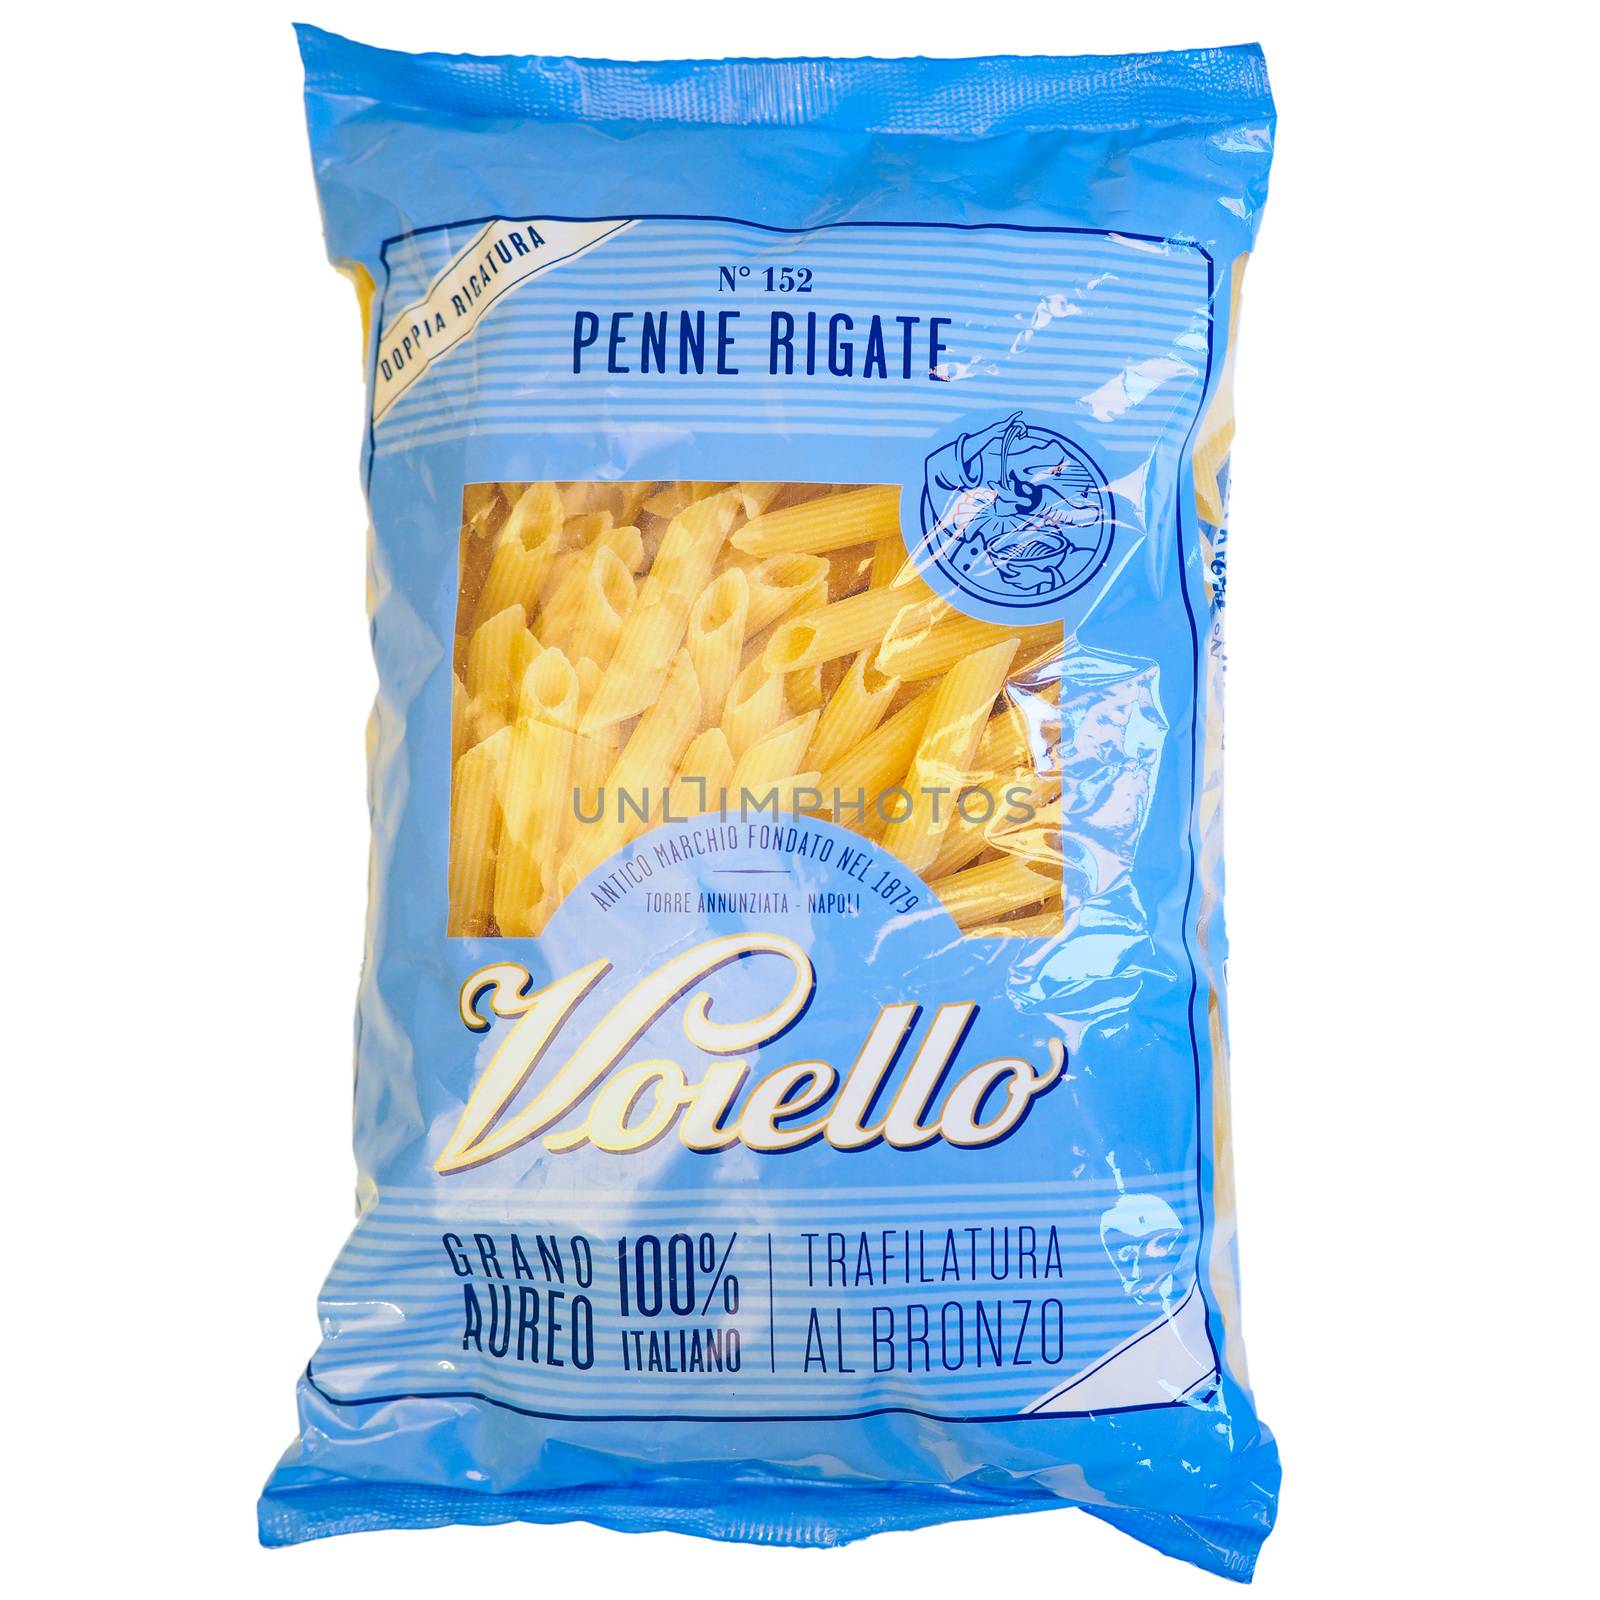 NAPLES, ITALY - DECEMBER 15, 2014: Voiello Penne Rigate pasta